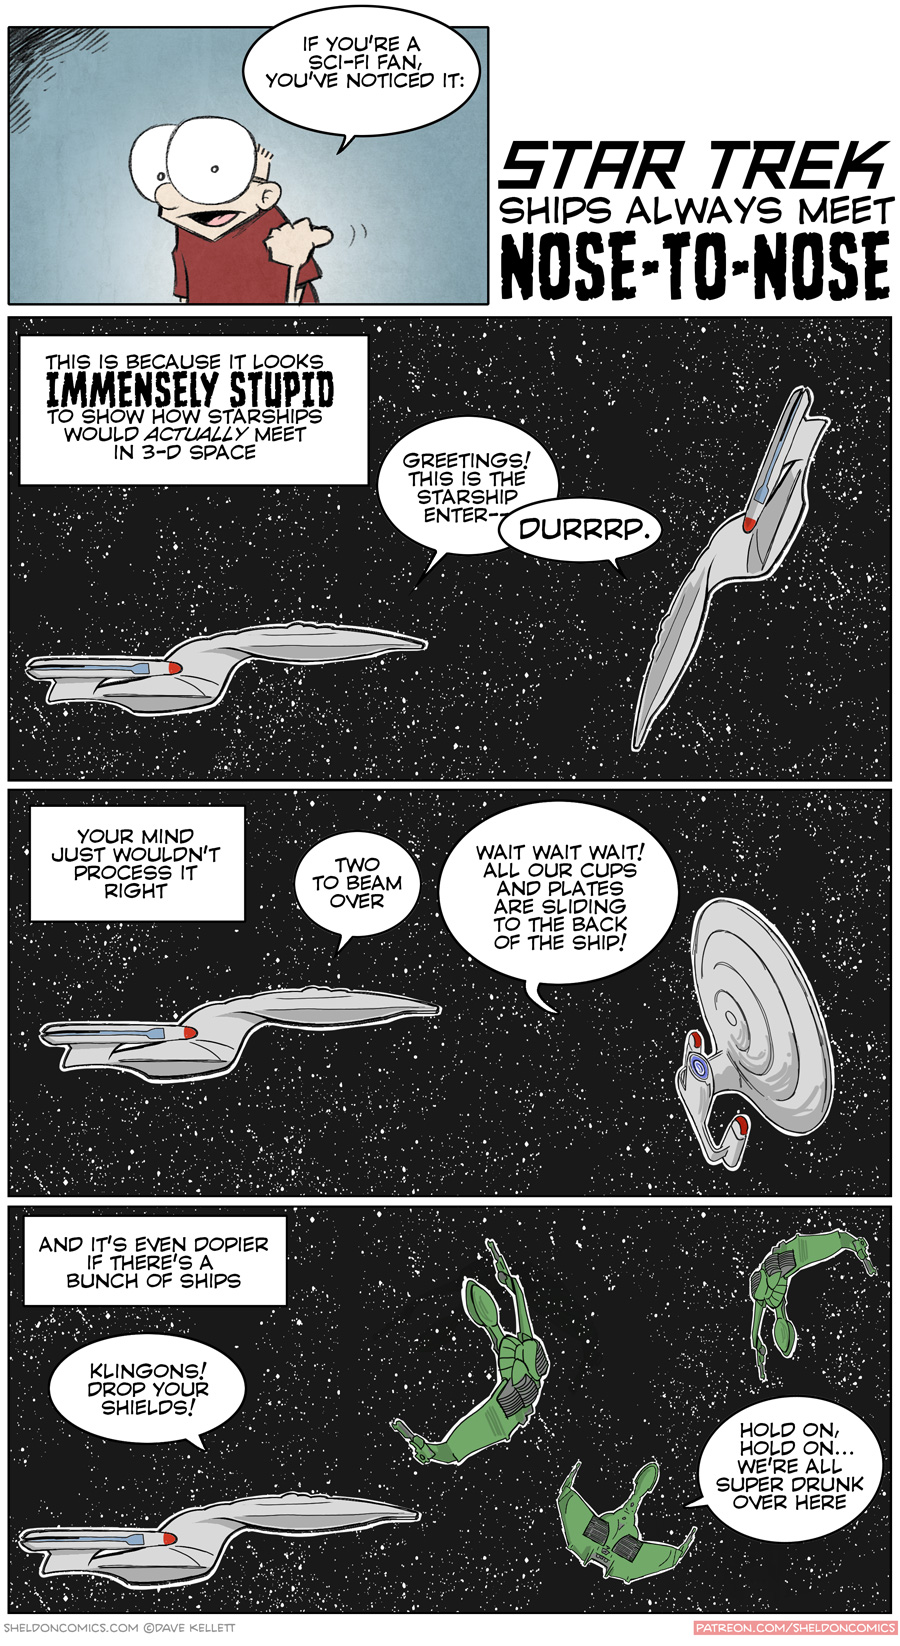 Why Star Trek ships always meet nose-to-nose